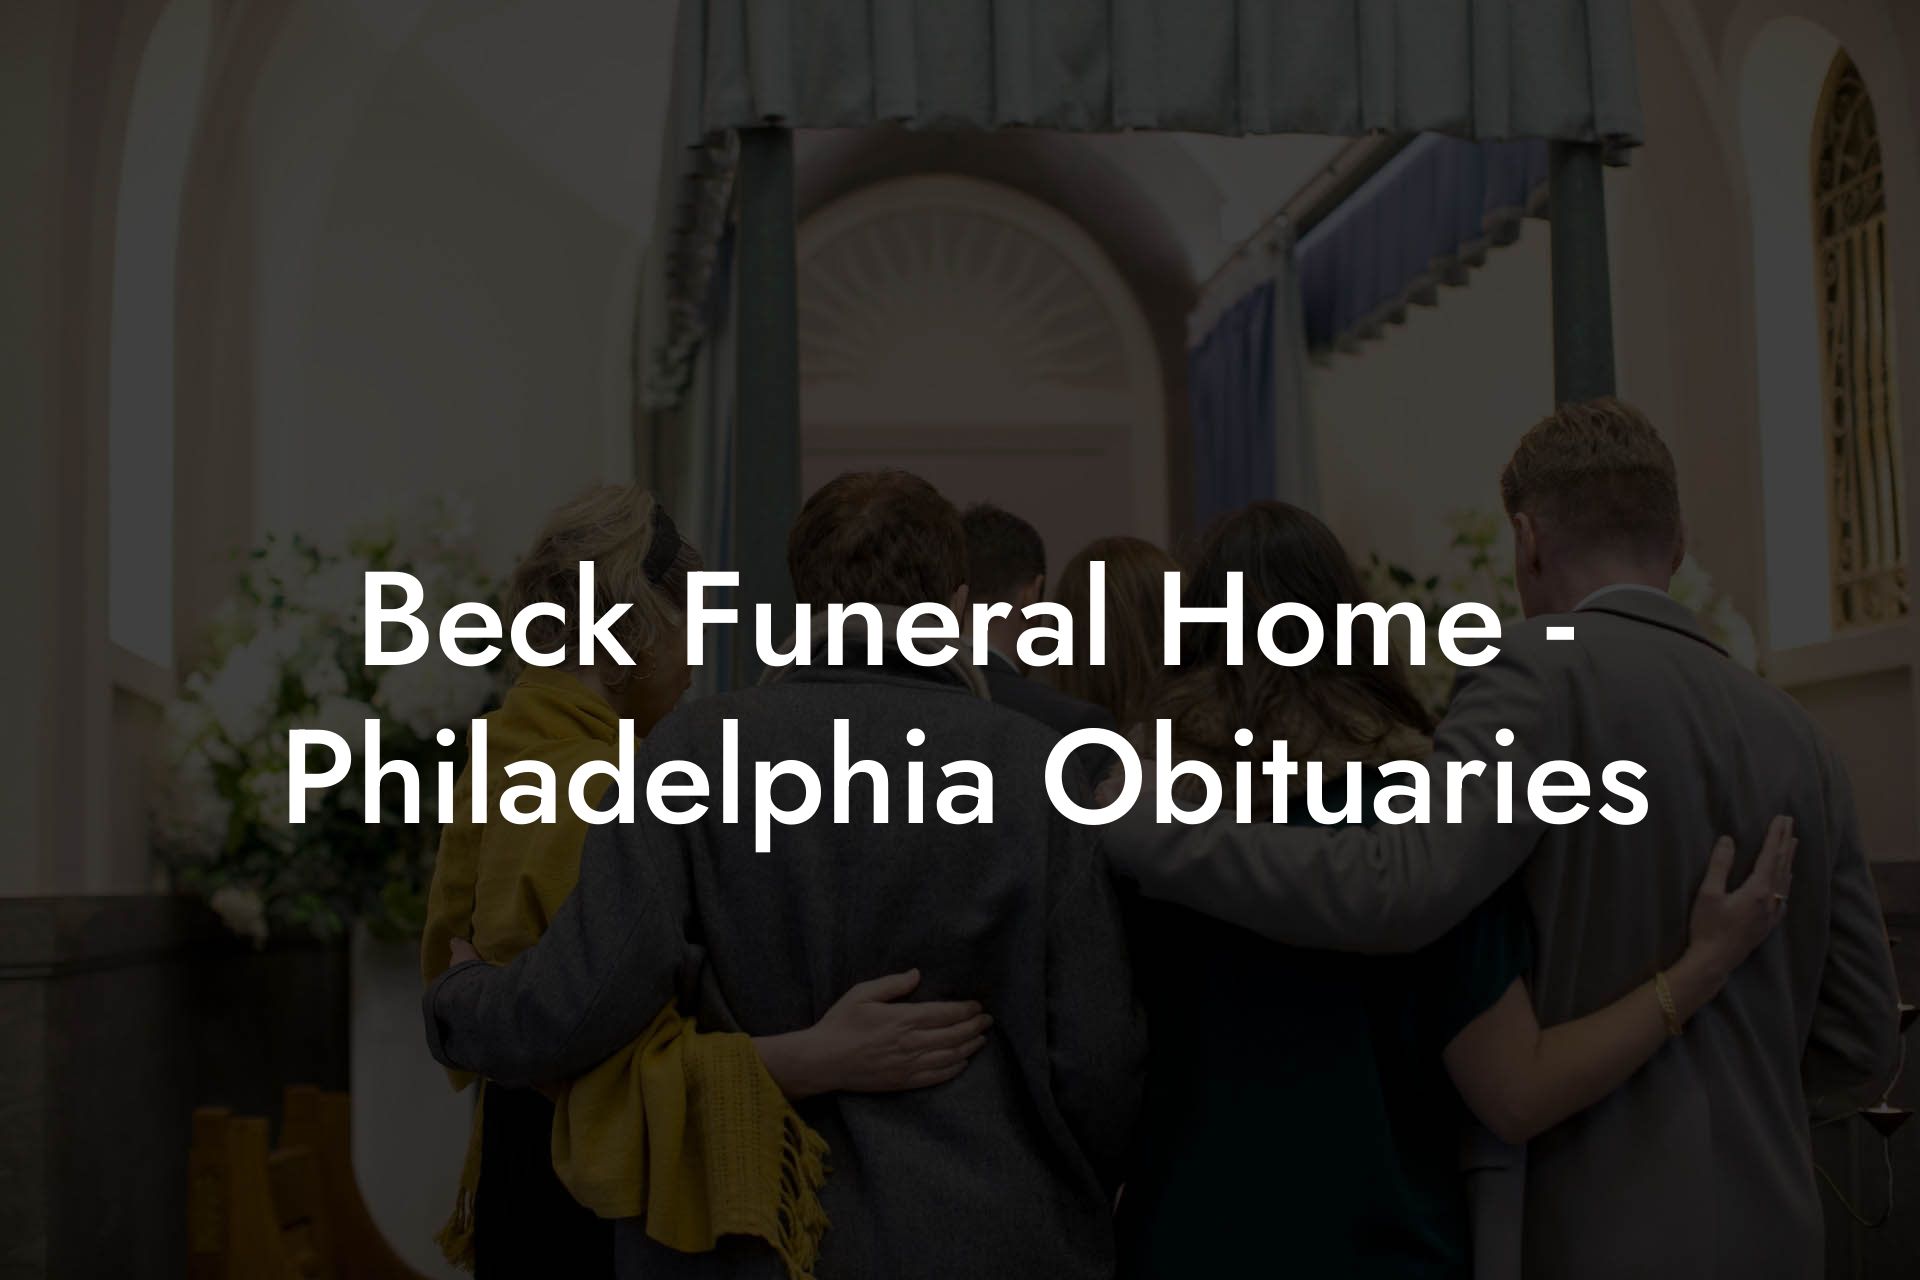 Beck Funeral Home - Philadelphia Obituaries